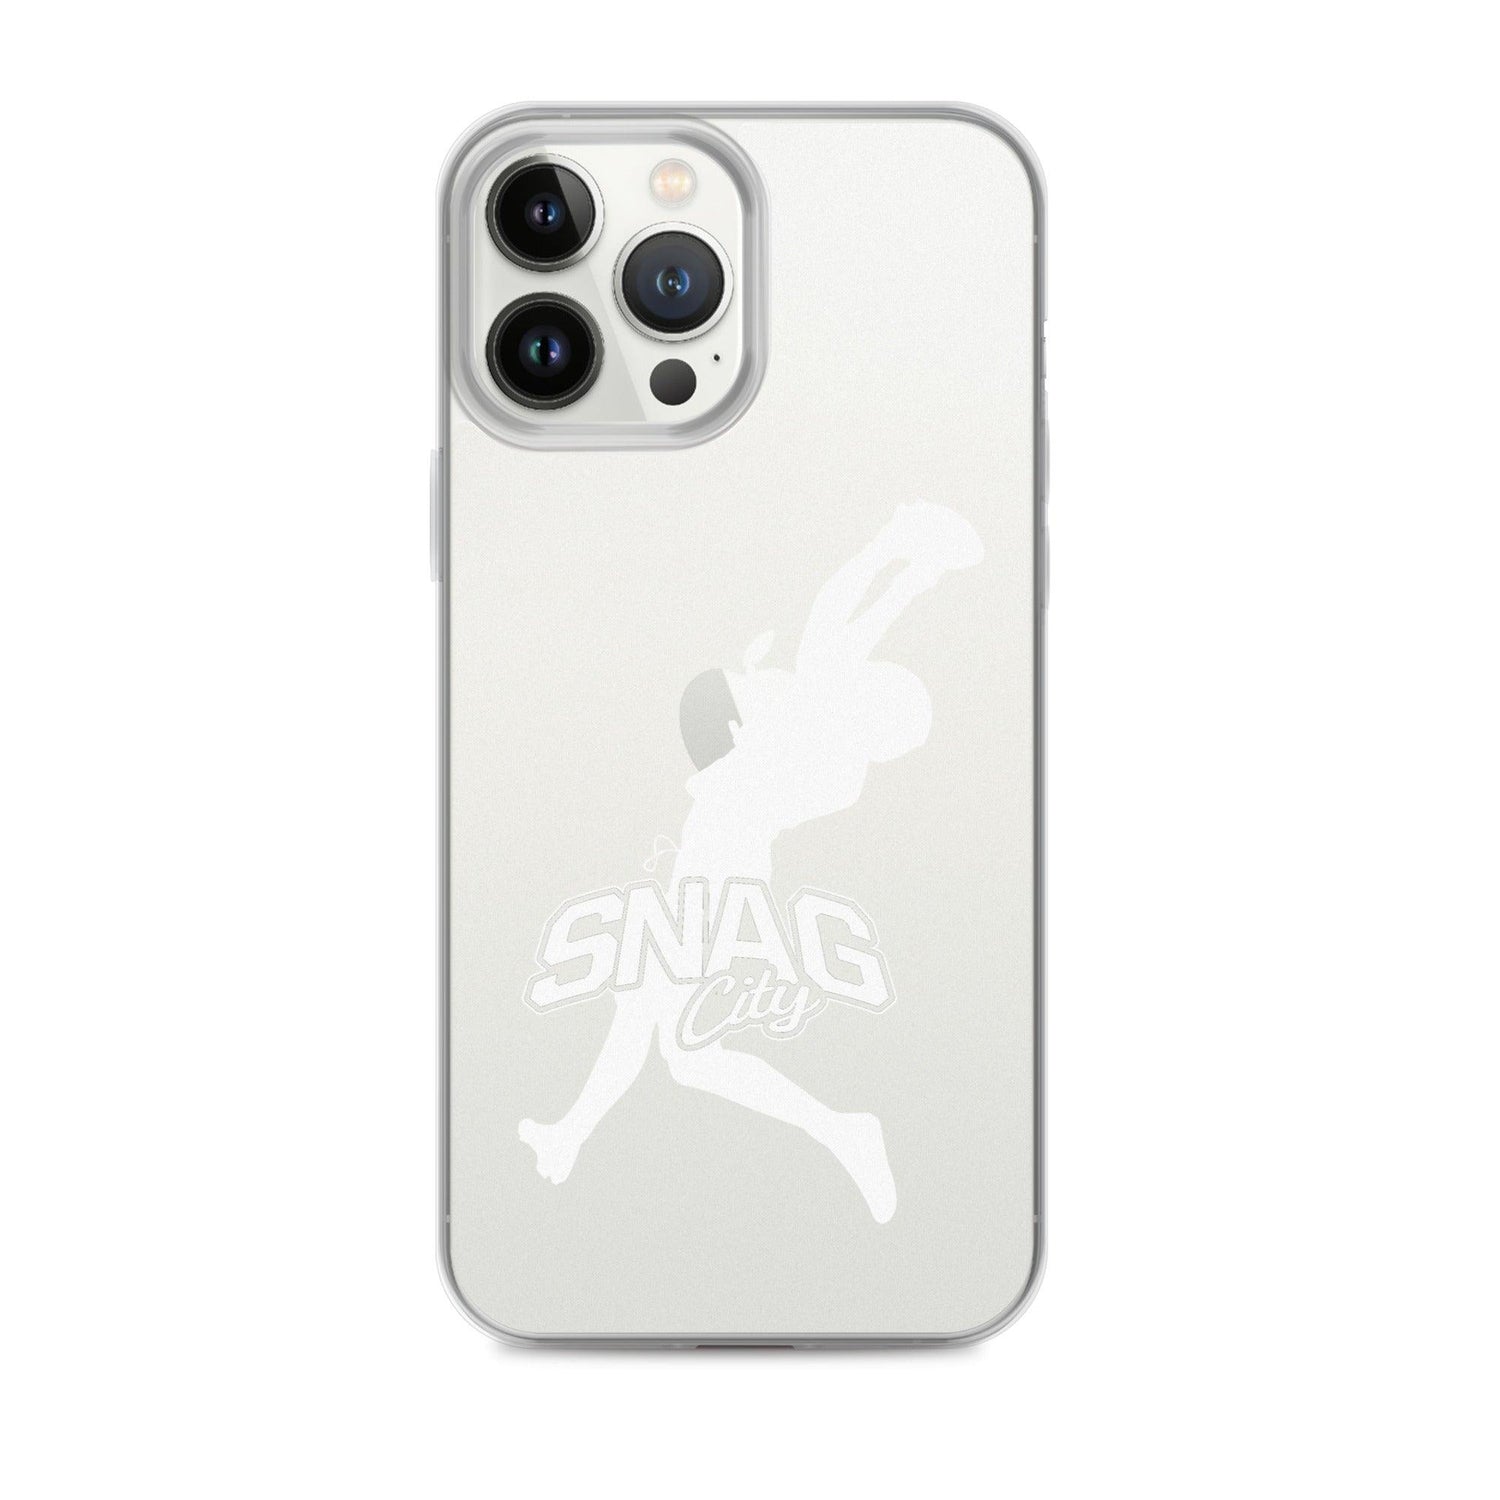 Khowtv "Snag City" iPhone® - Fan Arch